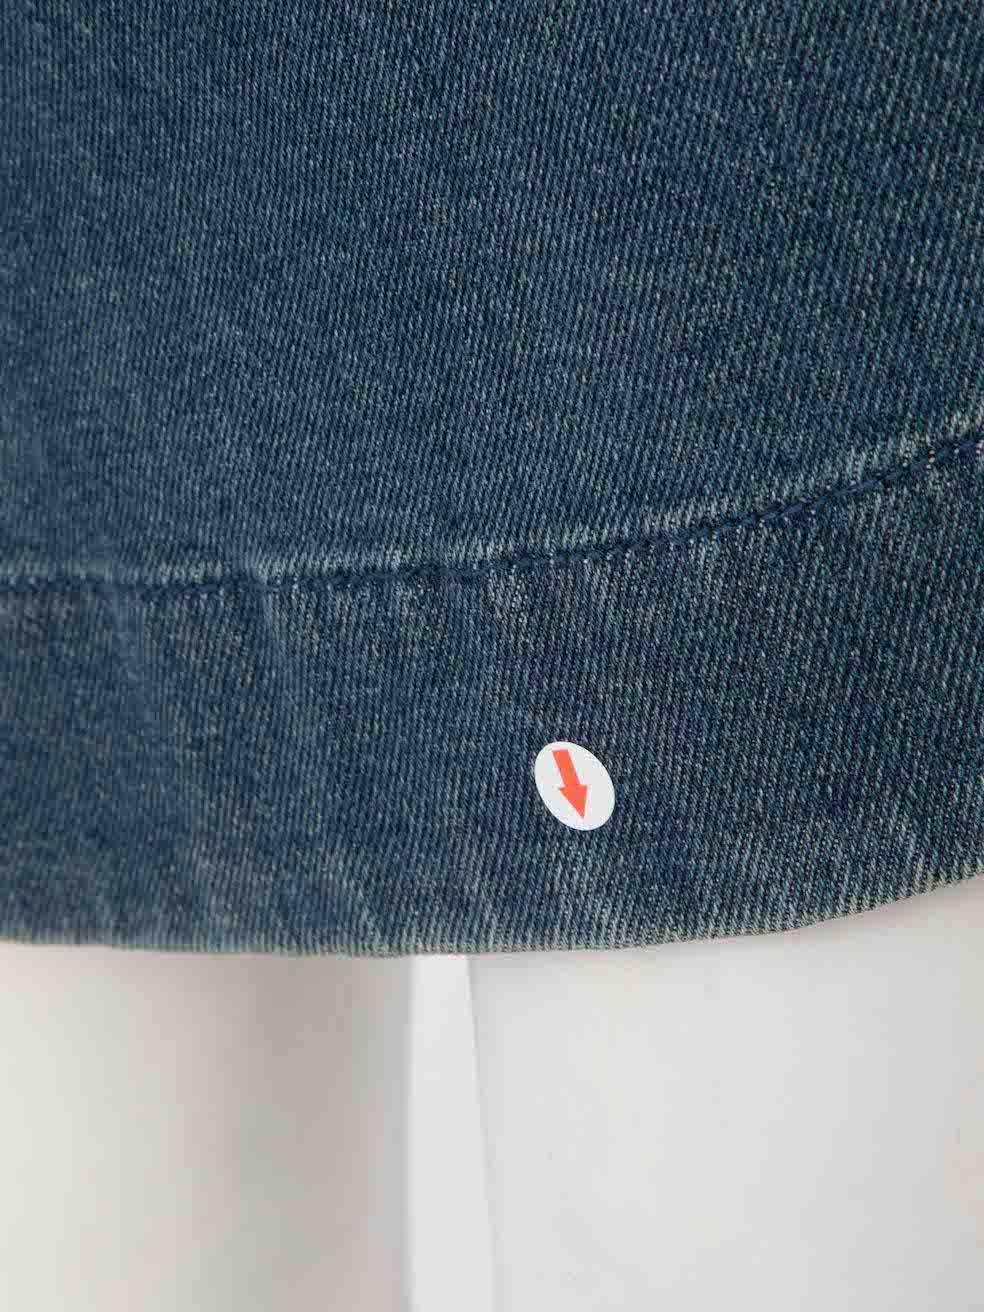 Chloé Blue Denim Buttoned Midi Skirt Size S For Sale 2